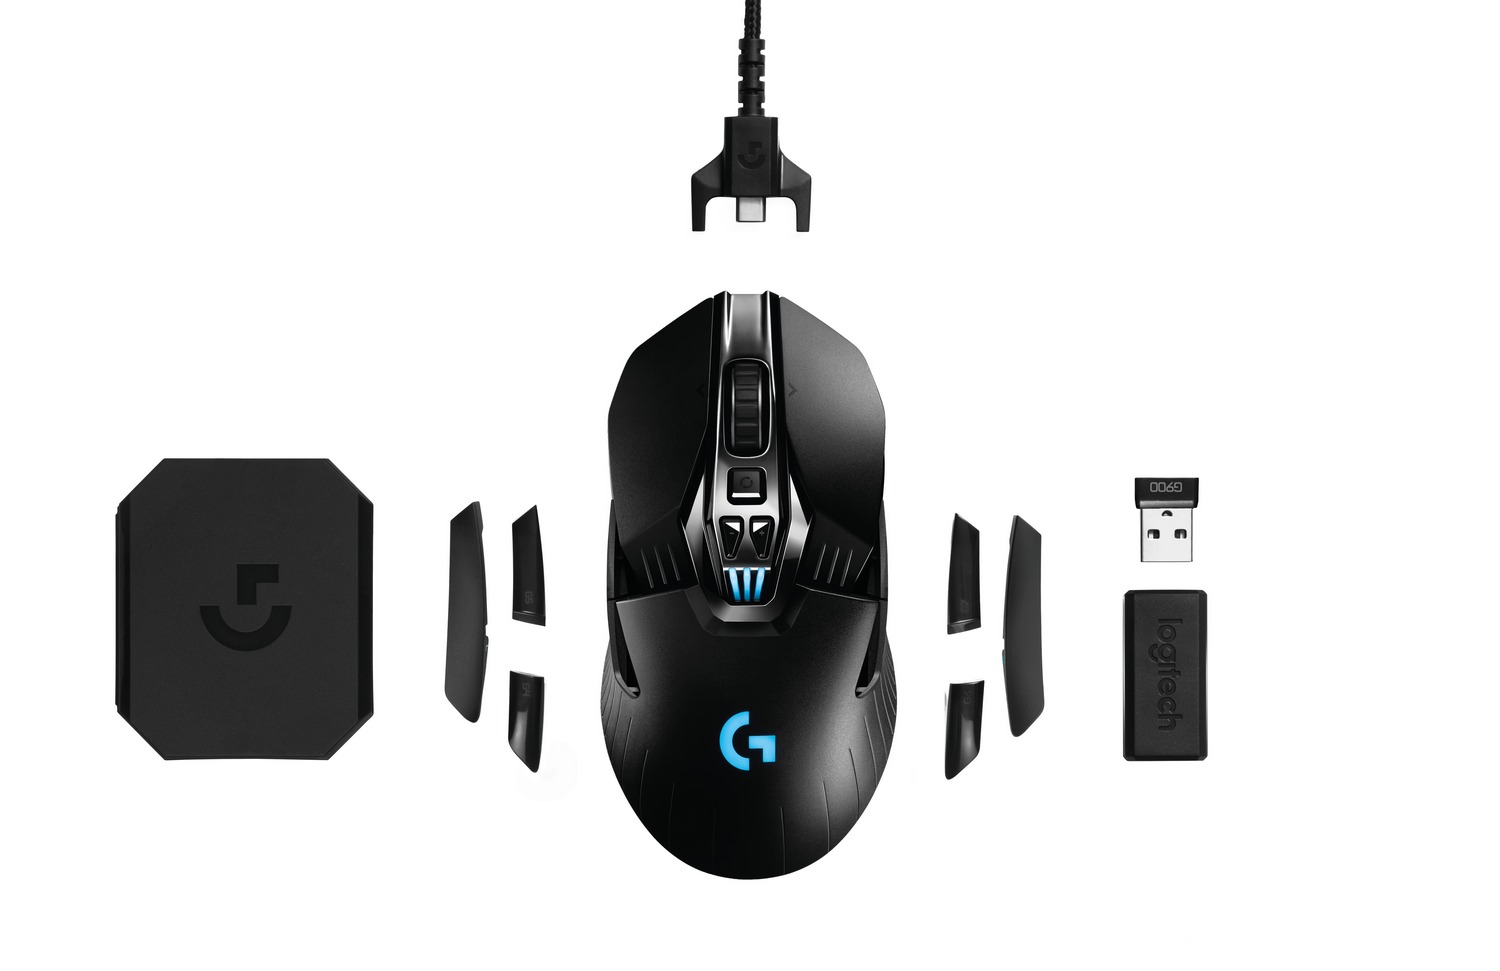 Logitech Announces The Ambidextrous G900 Chaos Gaming Mouse